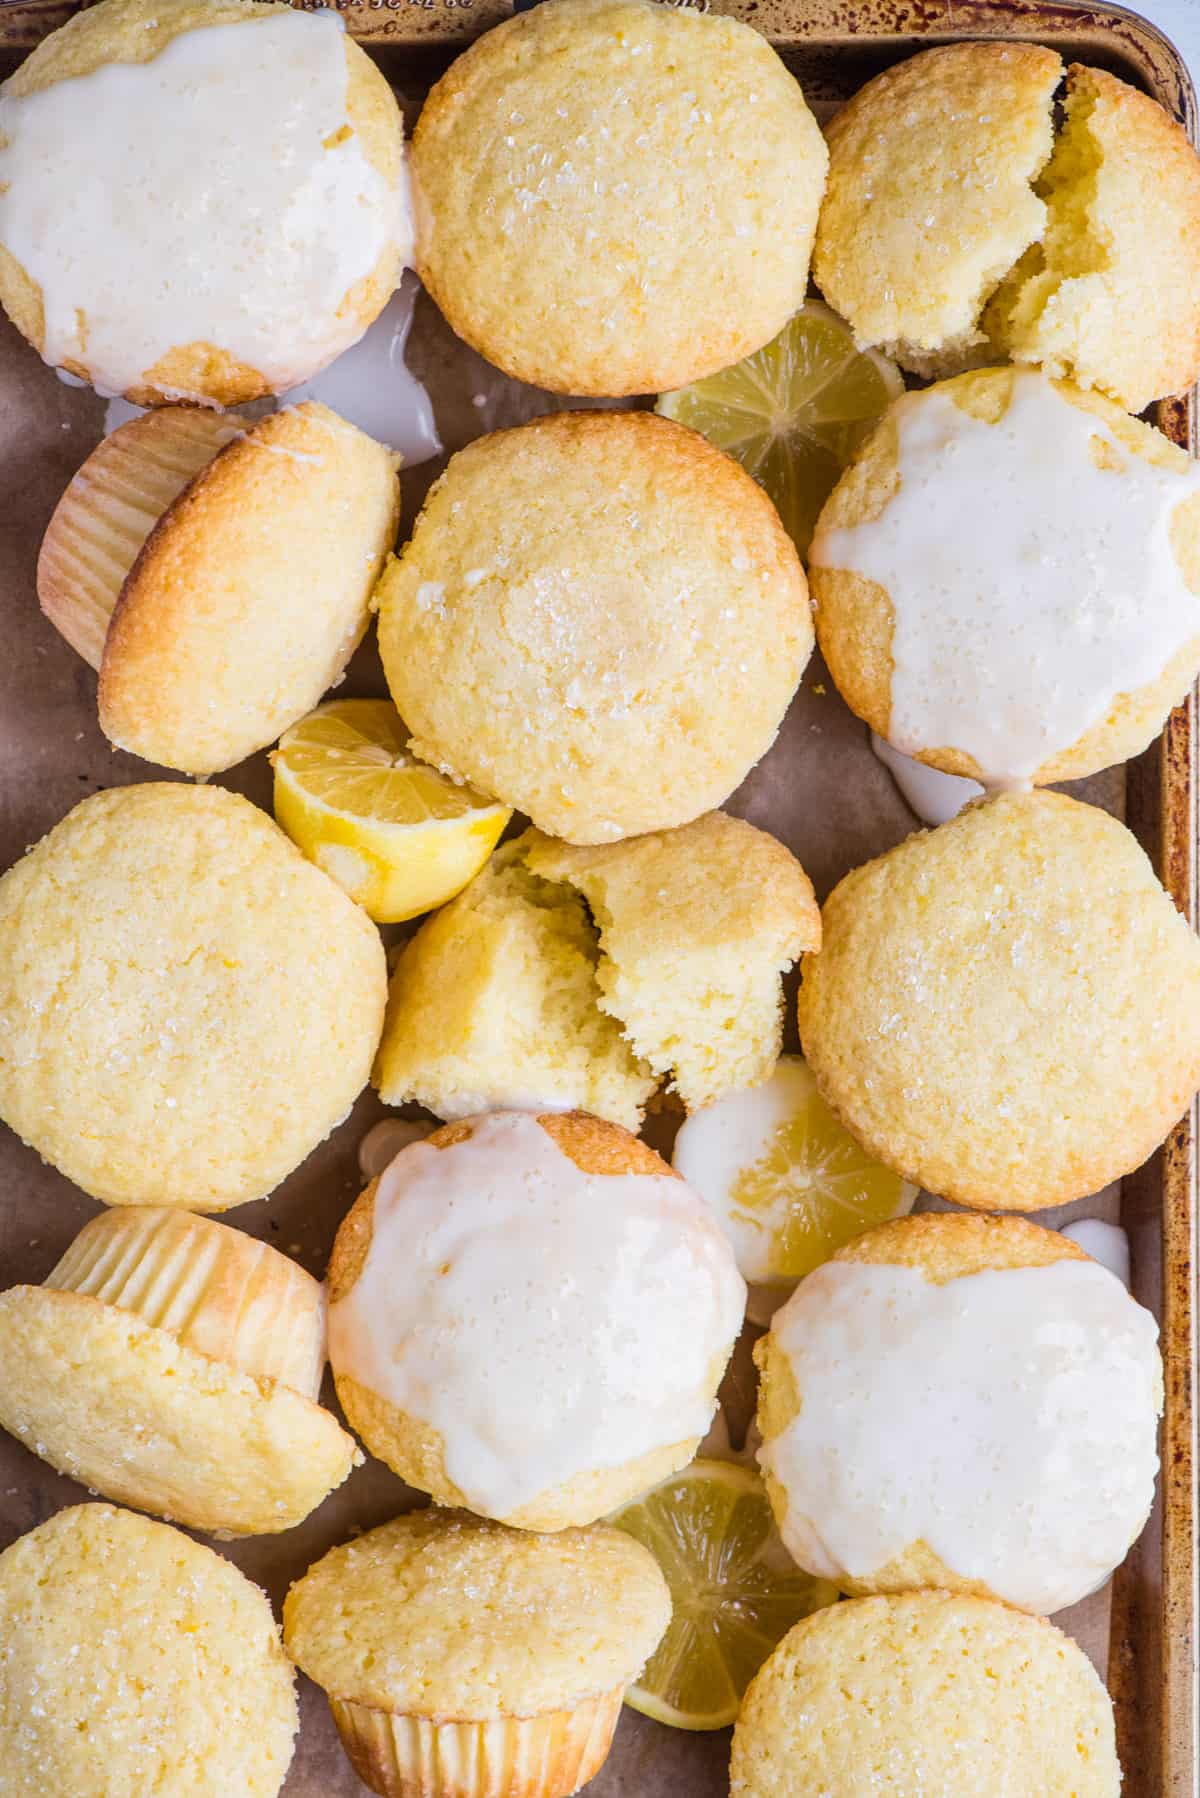 lemon muffins arranged in a grid on a metal baking sheet